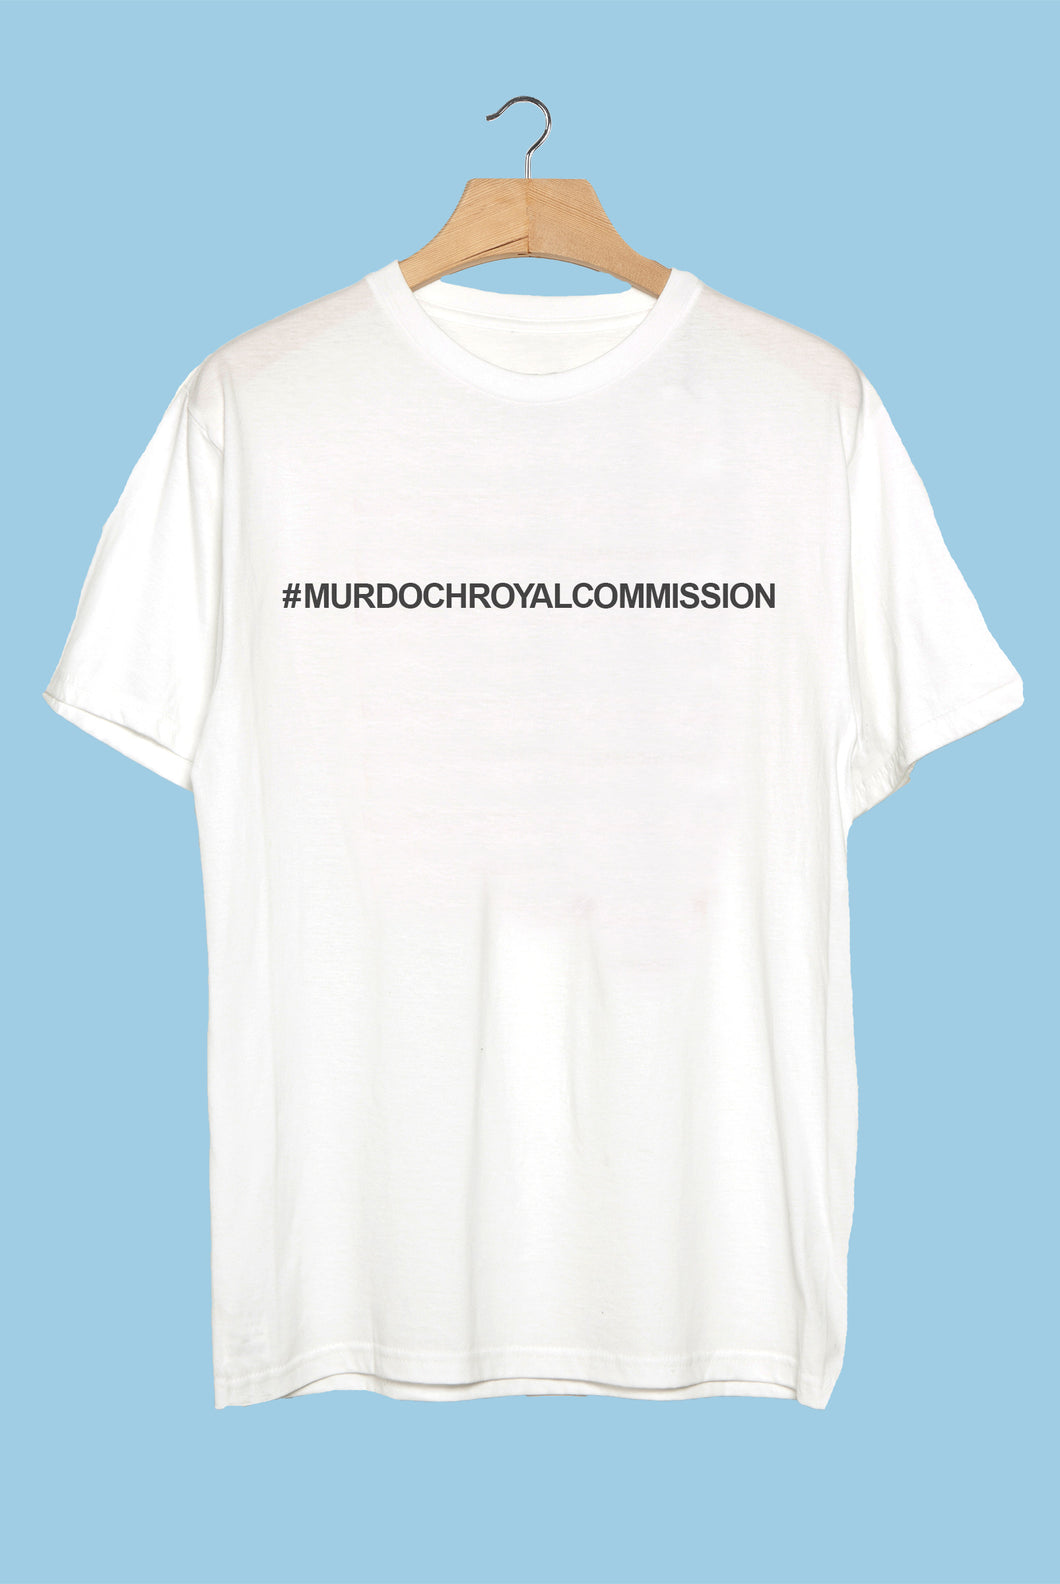 #MurdochRoyalCommission T-Shirt - Black on White